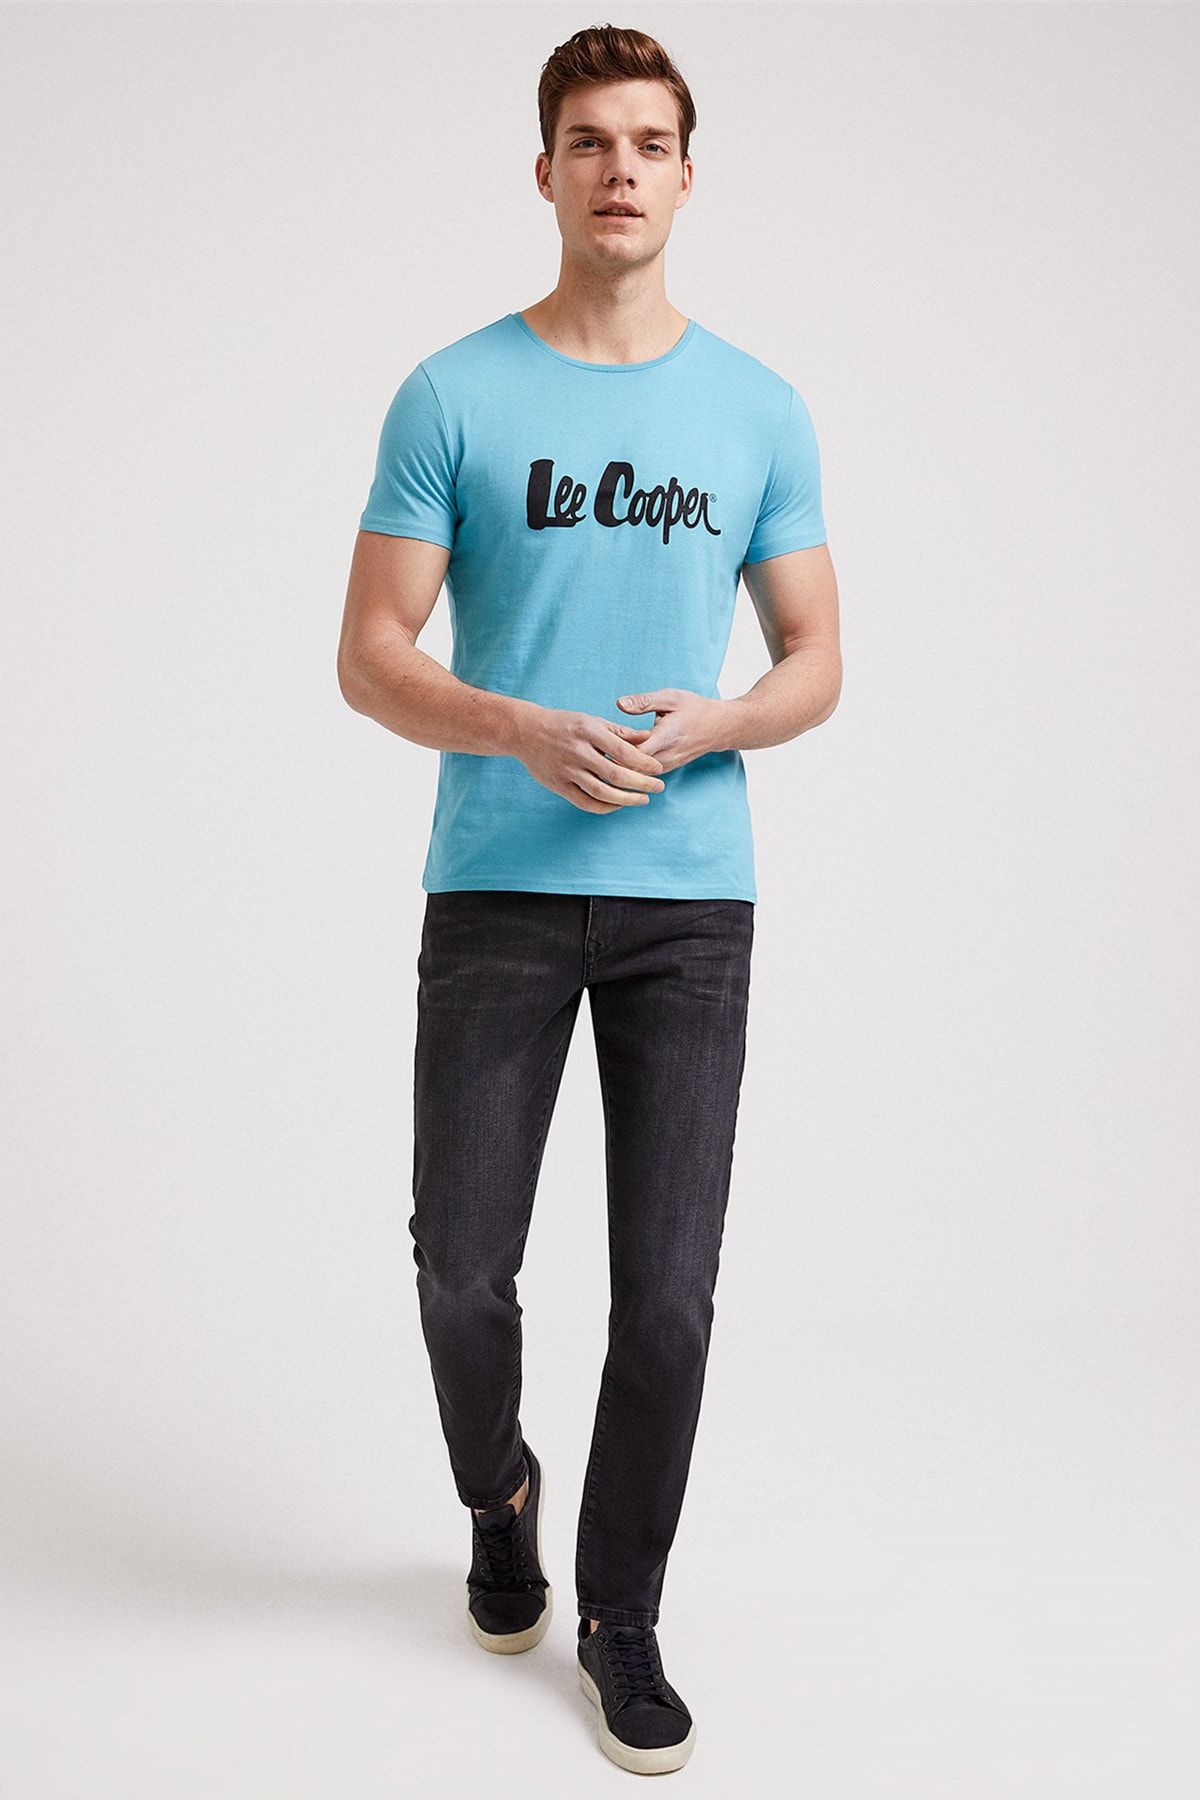 Lee Cooper Erkek Londonlogo O Yaka T-Shirt Turkuaz 202 LCM 242011